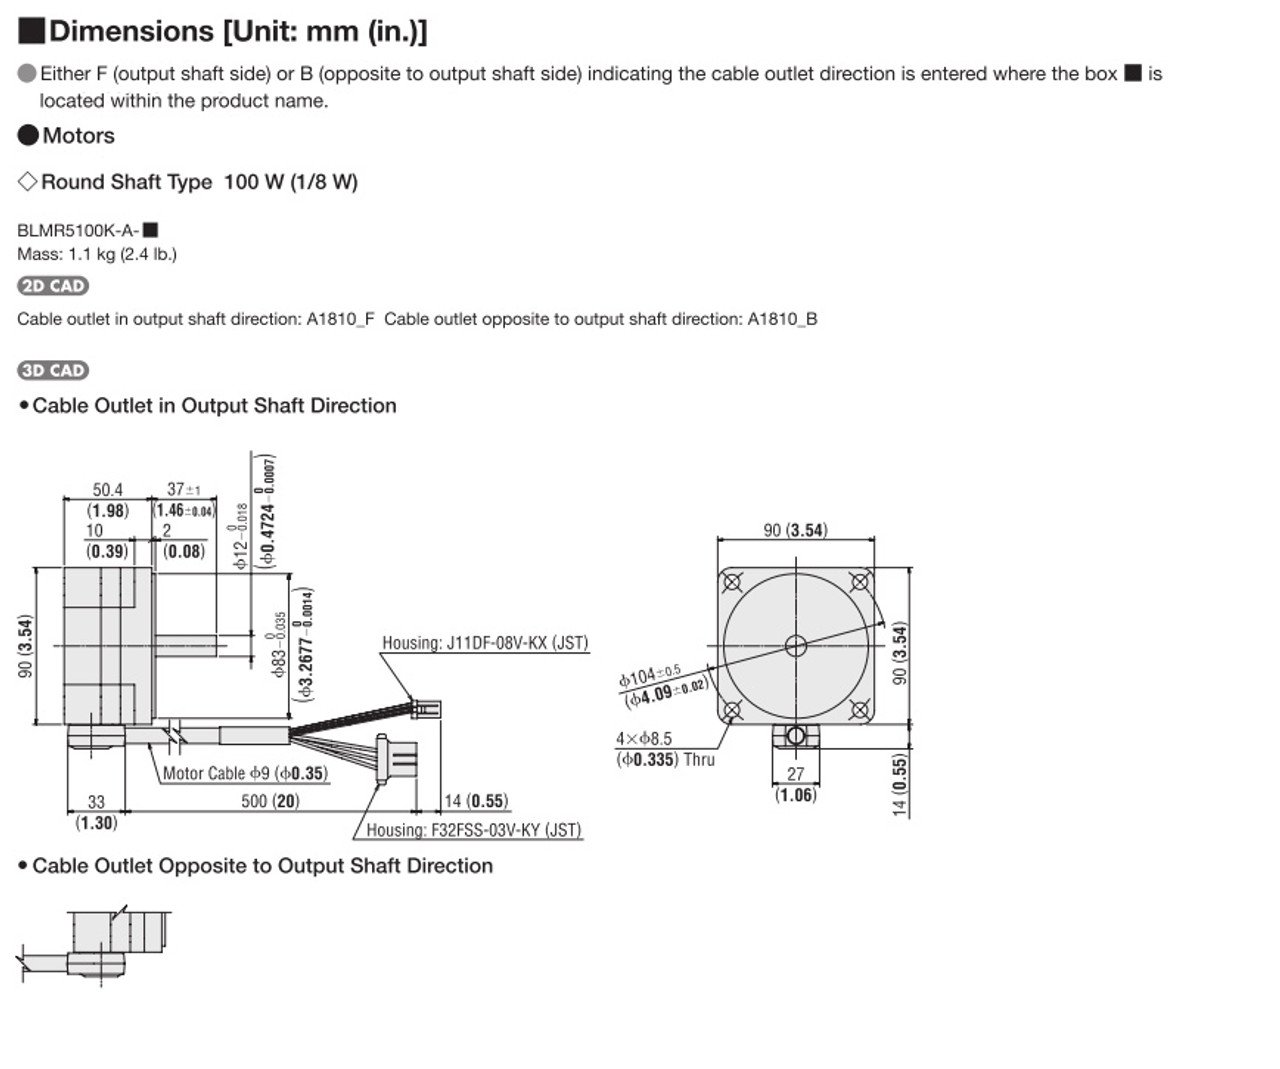 BLMR5100K-A-B - Dimensions